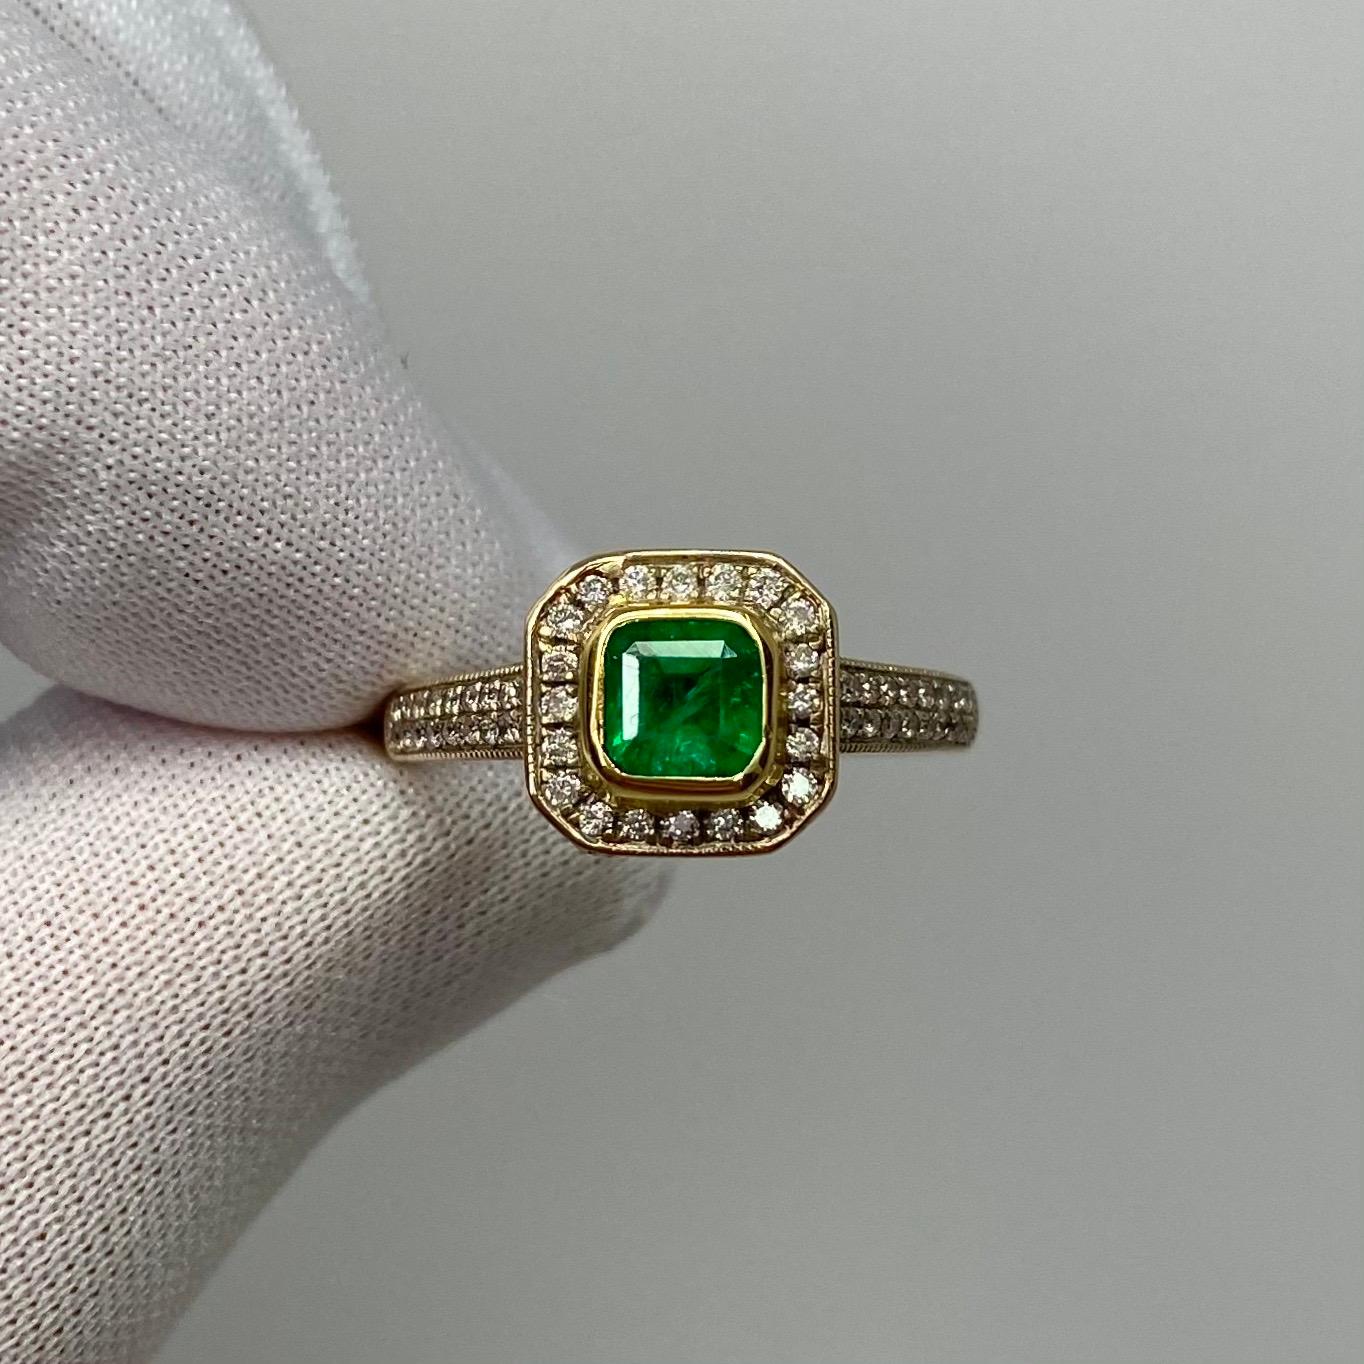 Square Cut 1.05 Carat Vivid Green Colombian Emerald Diamond Art Deco Style 18K Gold Ring